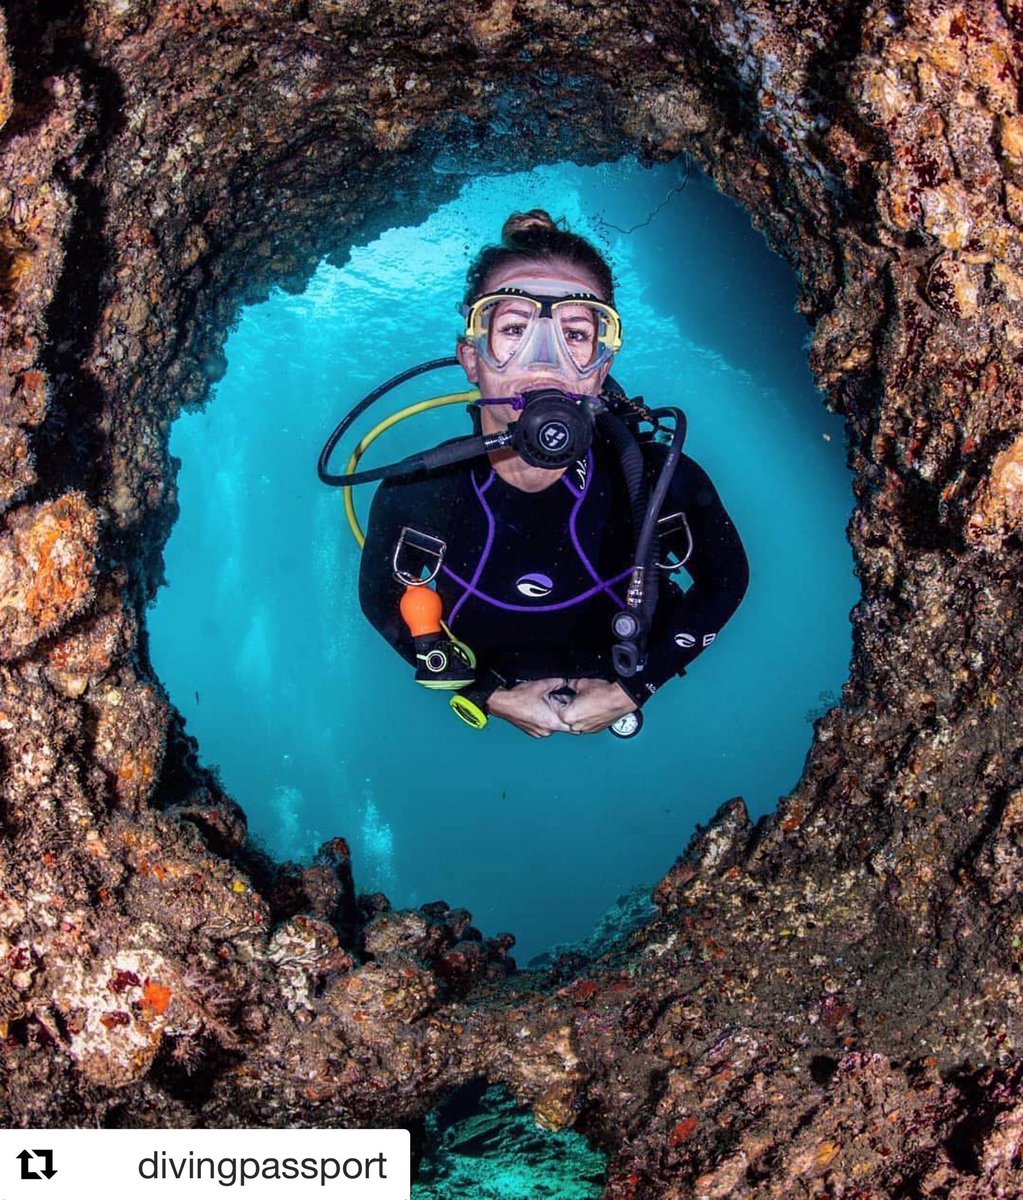 Love this photo! 🤙🏻👌🏻IG's  @DivingPassport @girlsthatscuba 
#padi #mypadi #scuba #diving #scubadiver #girlsthatscuba #scubalove #scubagirl #divelife #mermaid #diver #underwater #ocean #sea #sealife #explore #adventure #shoredive #boatdive #travel #divetravel #openwater #padiwomen